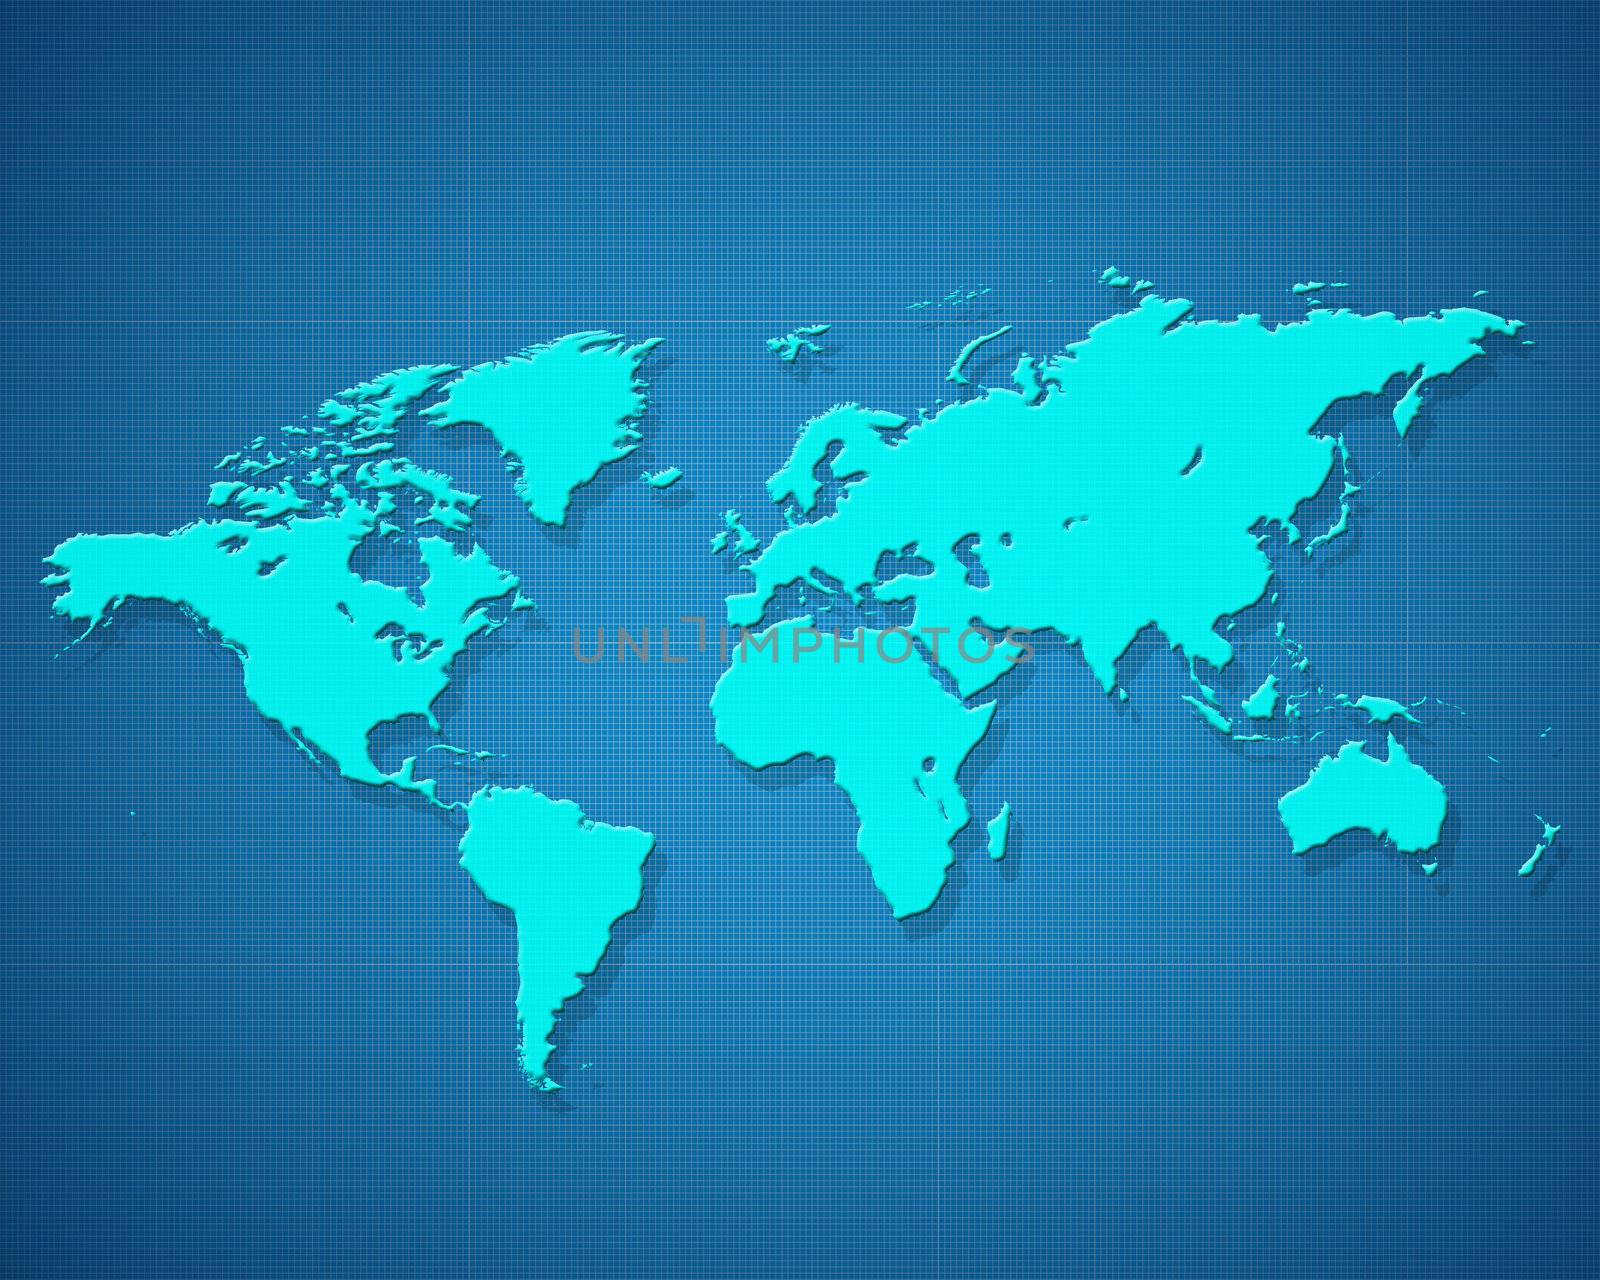 World map by mereutaandrei